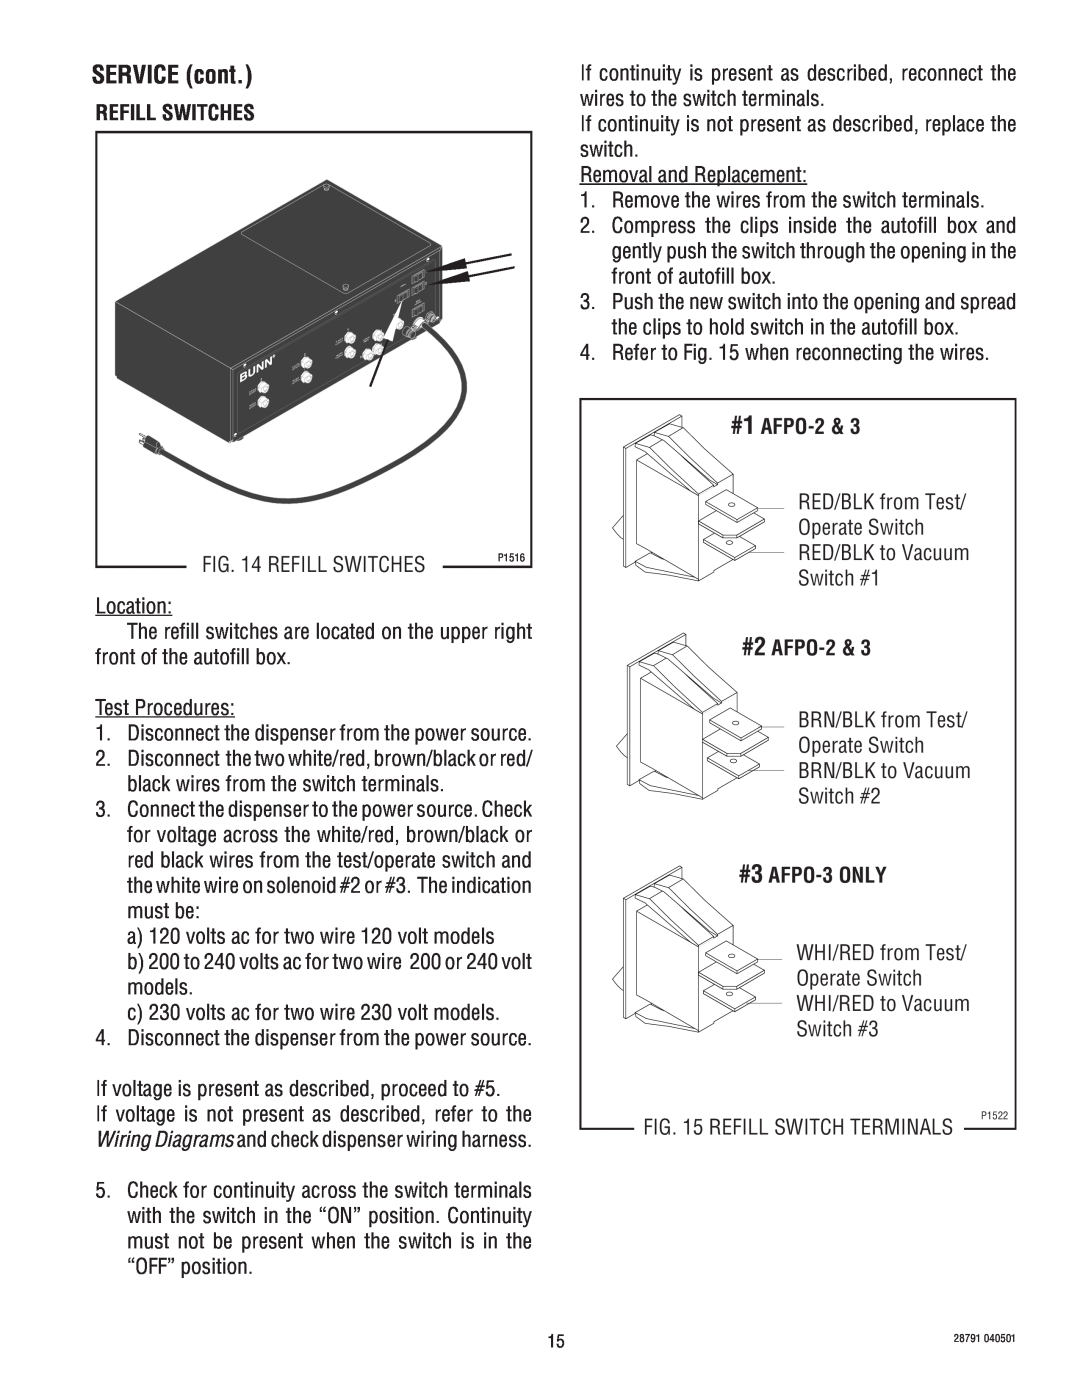 Bunn AFPO-2 SL service manual Refill Switches, SERVICE cont, #1 AFPO-2, #2 AFPO-2, #3 AFPO-3 ONLY 